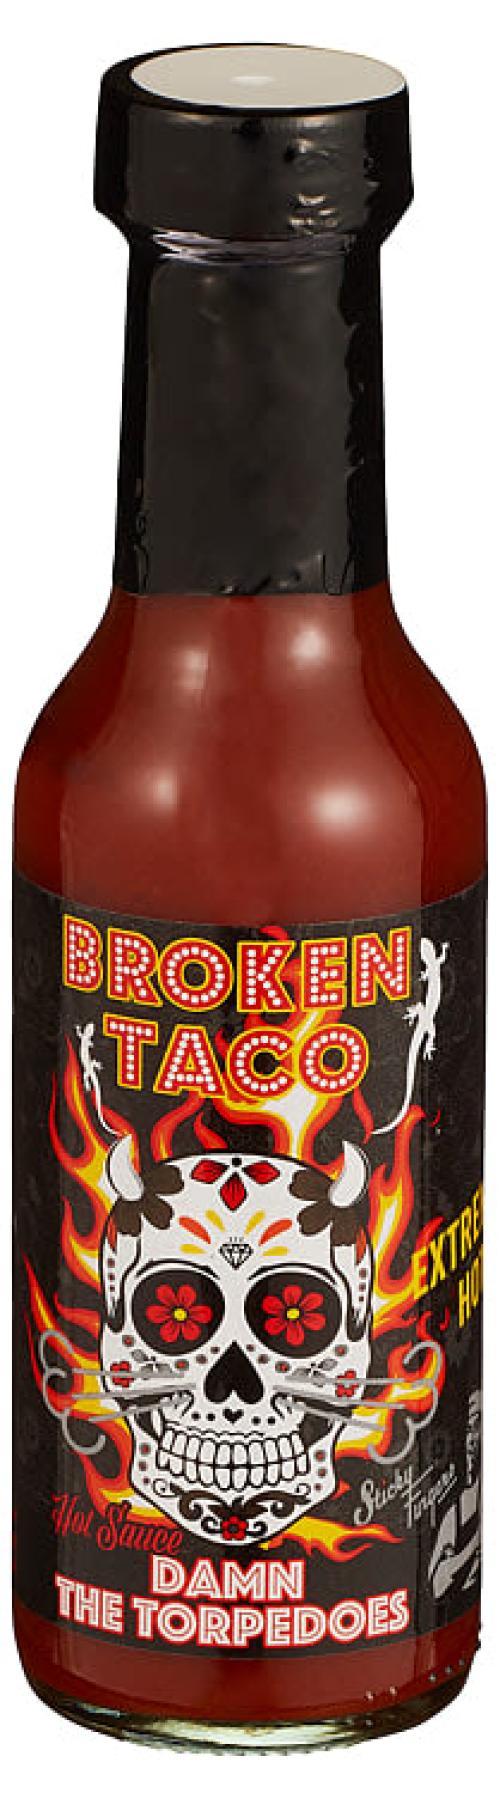 Taco Sauce Hell No Hot 150g Broken Taco